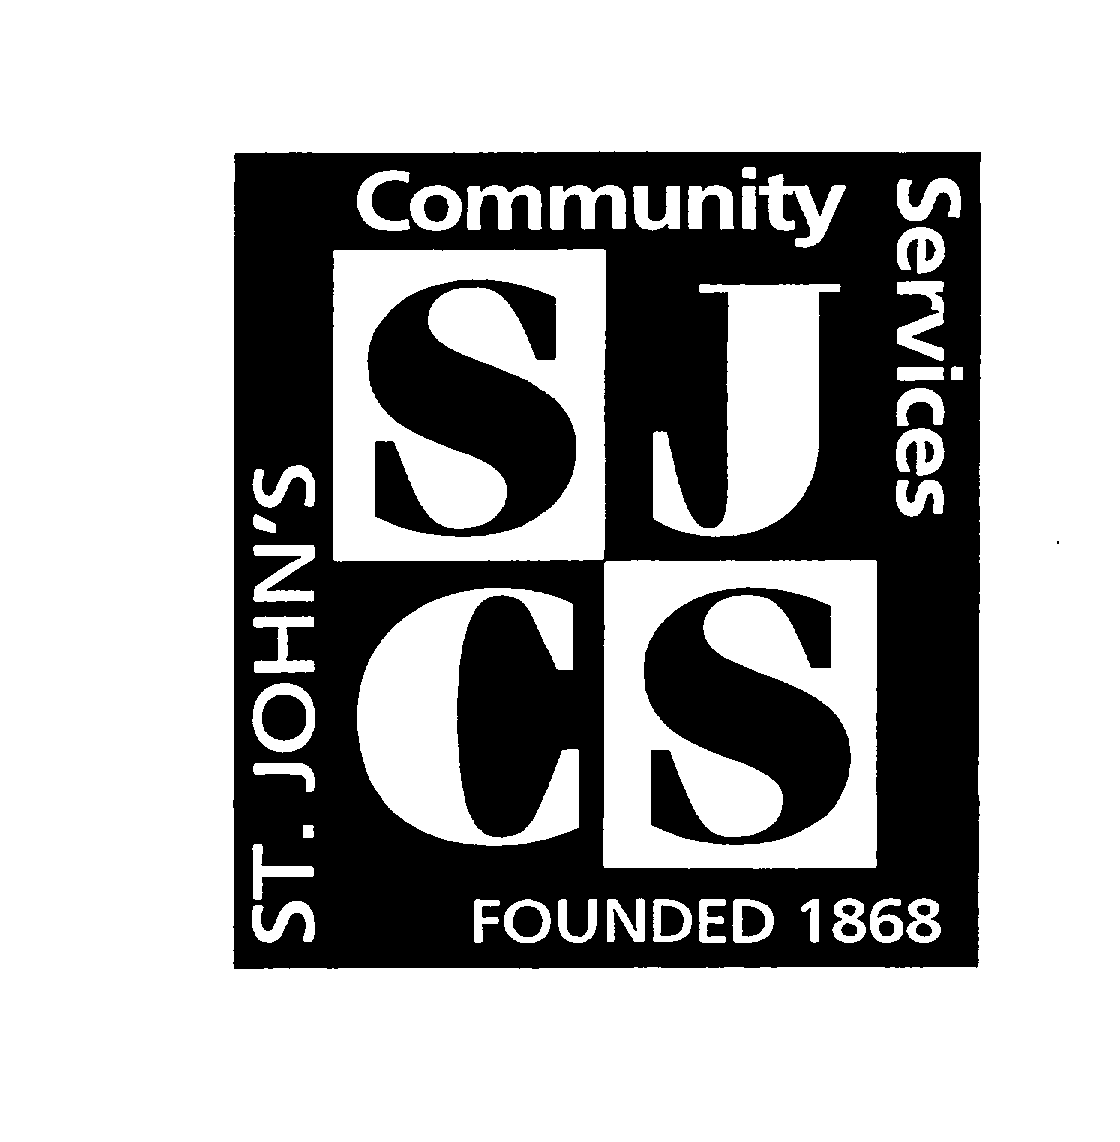  ST. JOHN'S COMMUNITY SERVICES FOUNDED 1868 SJCS